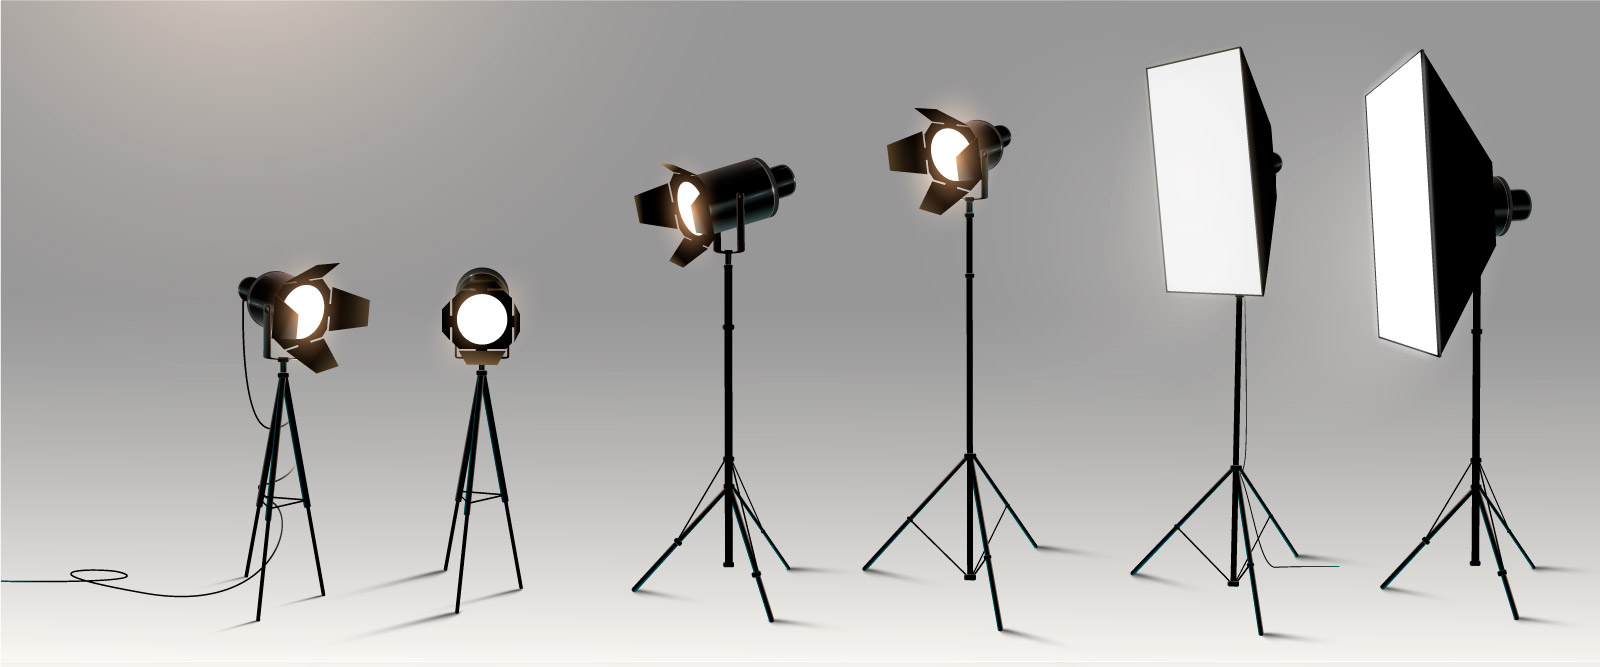 Photography Studio Equipment Hire - Lighting Hire - Camera Hire - Delivery  to UK - Flash Lighting Kits - Studio Lighting for Rent